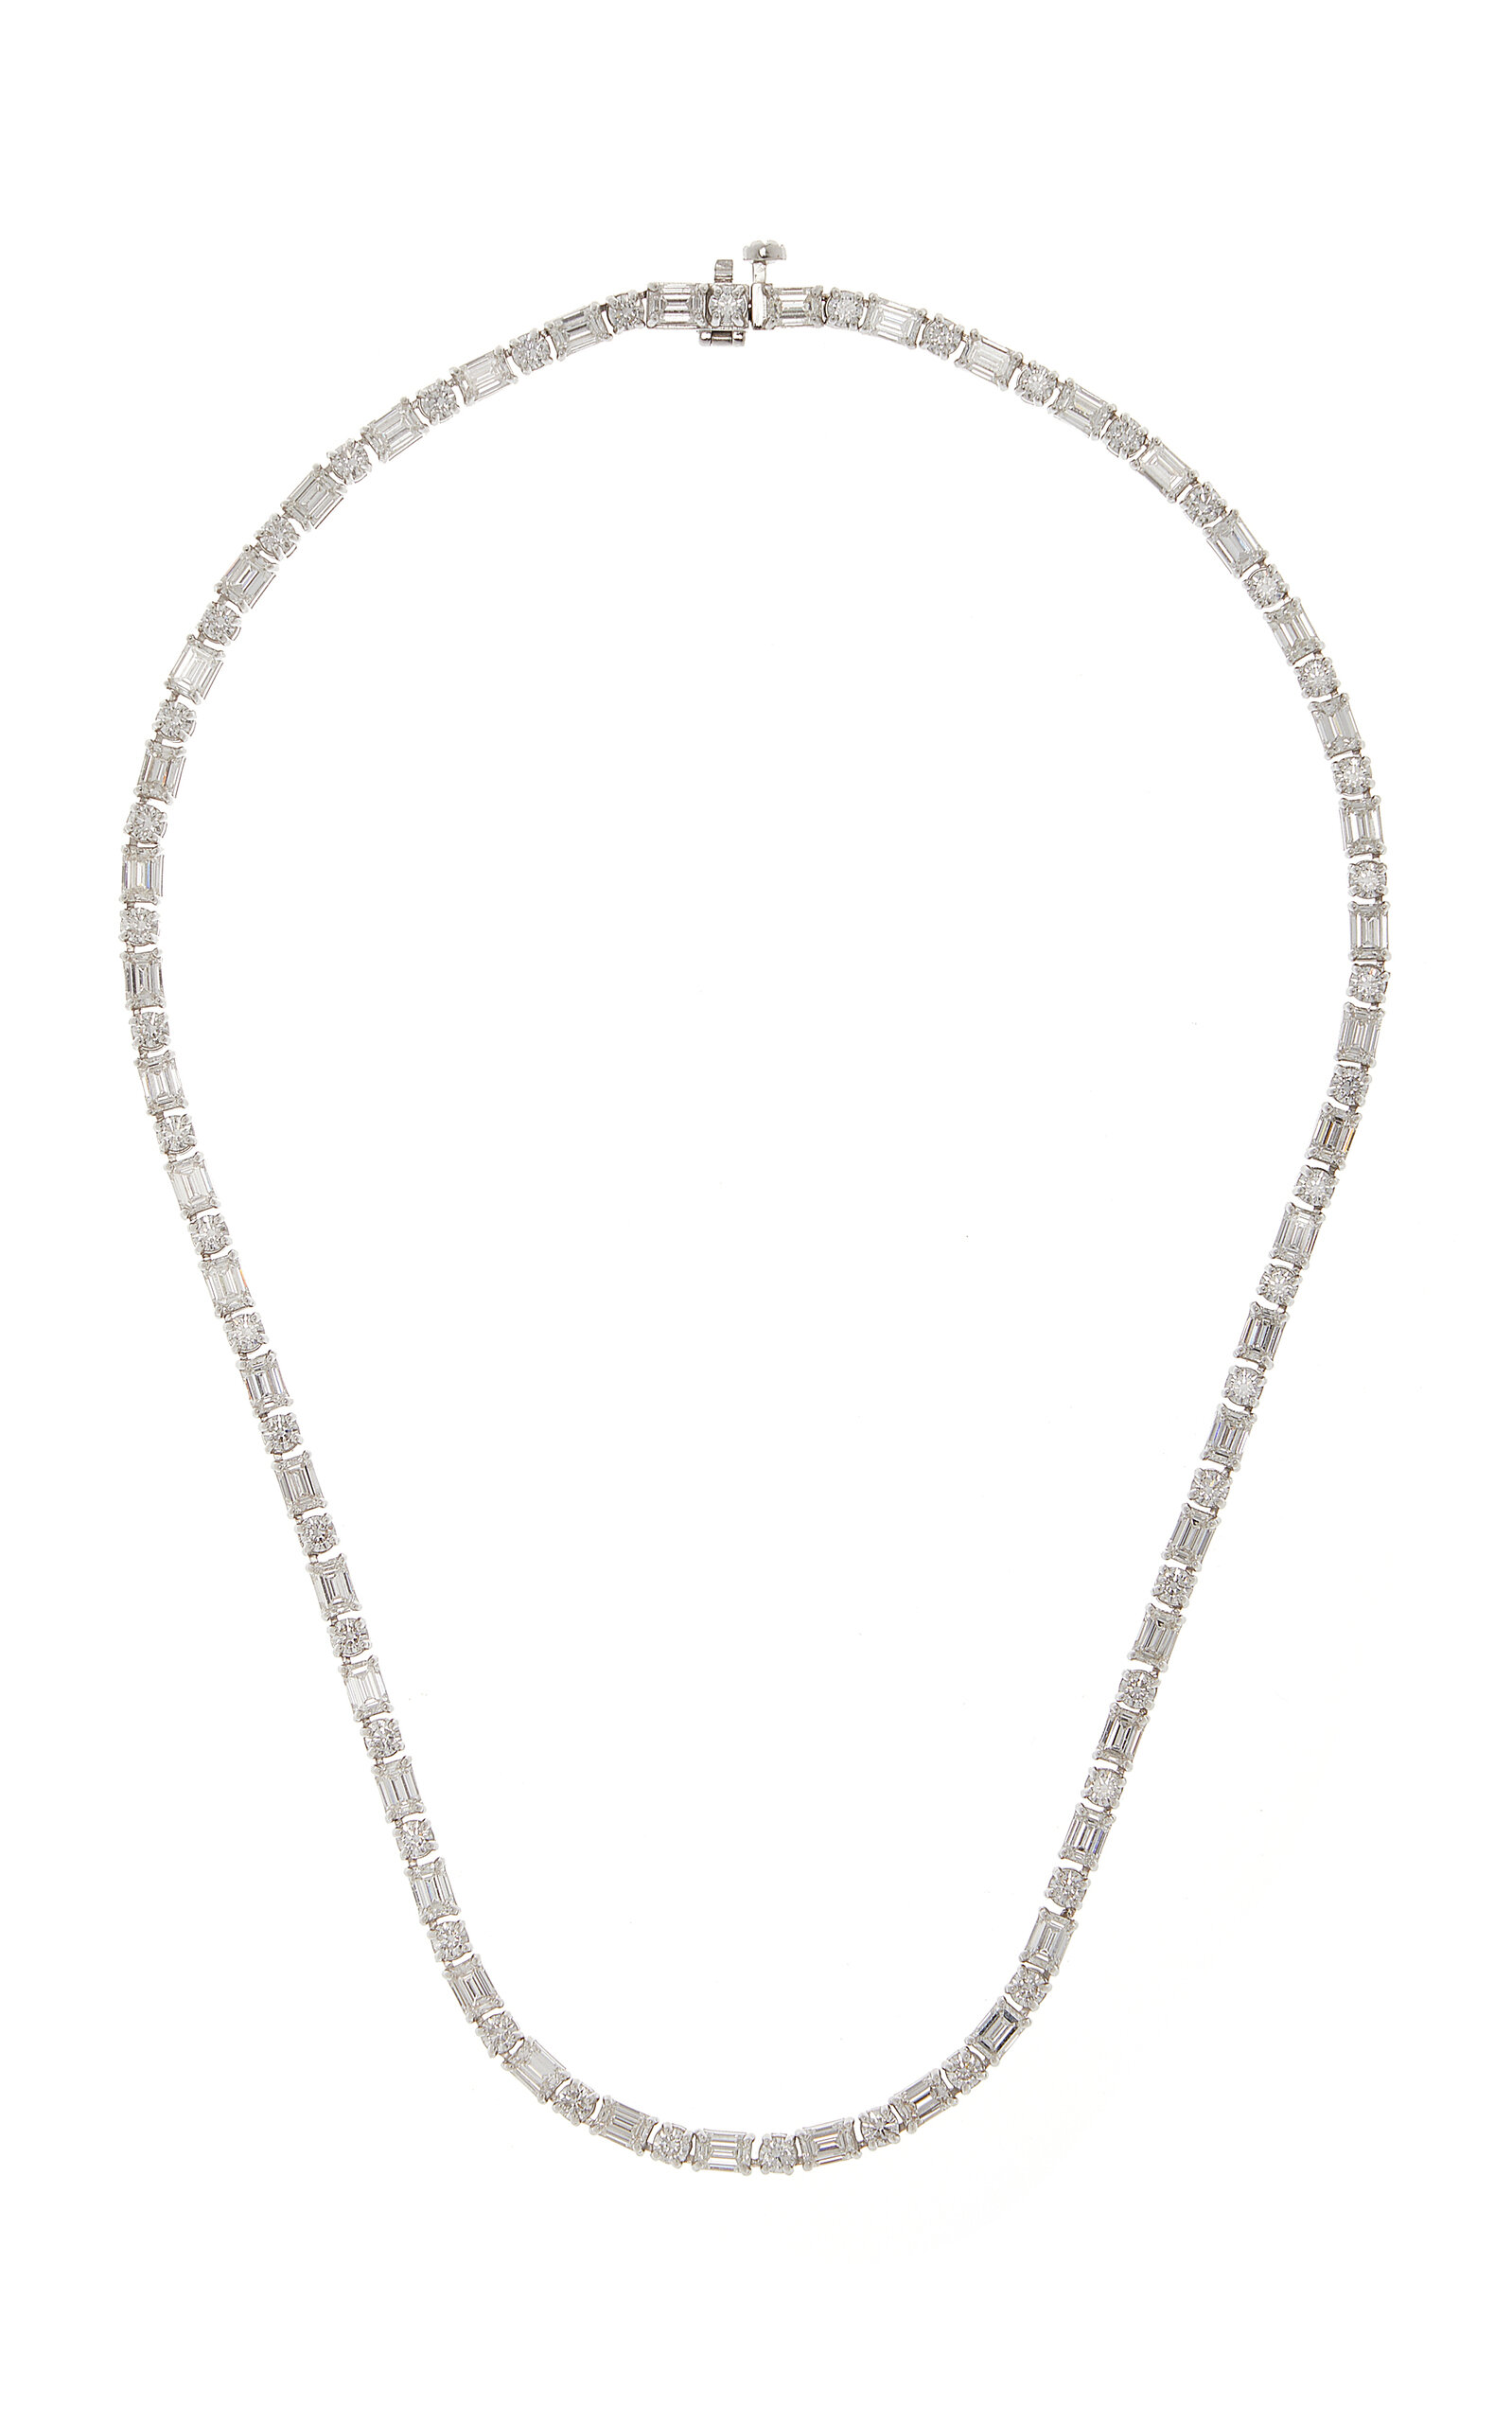 Emerald & Round VRAI Created Mixed Diamond Tennis Necklace